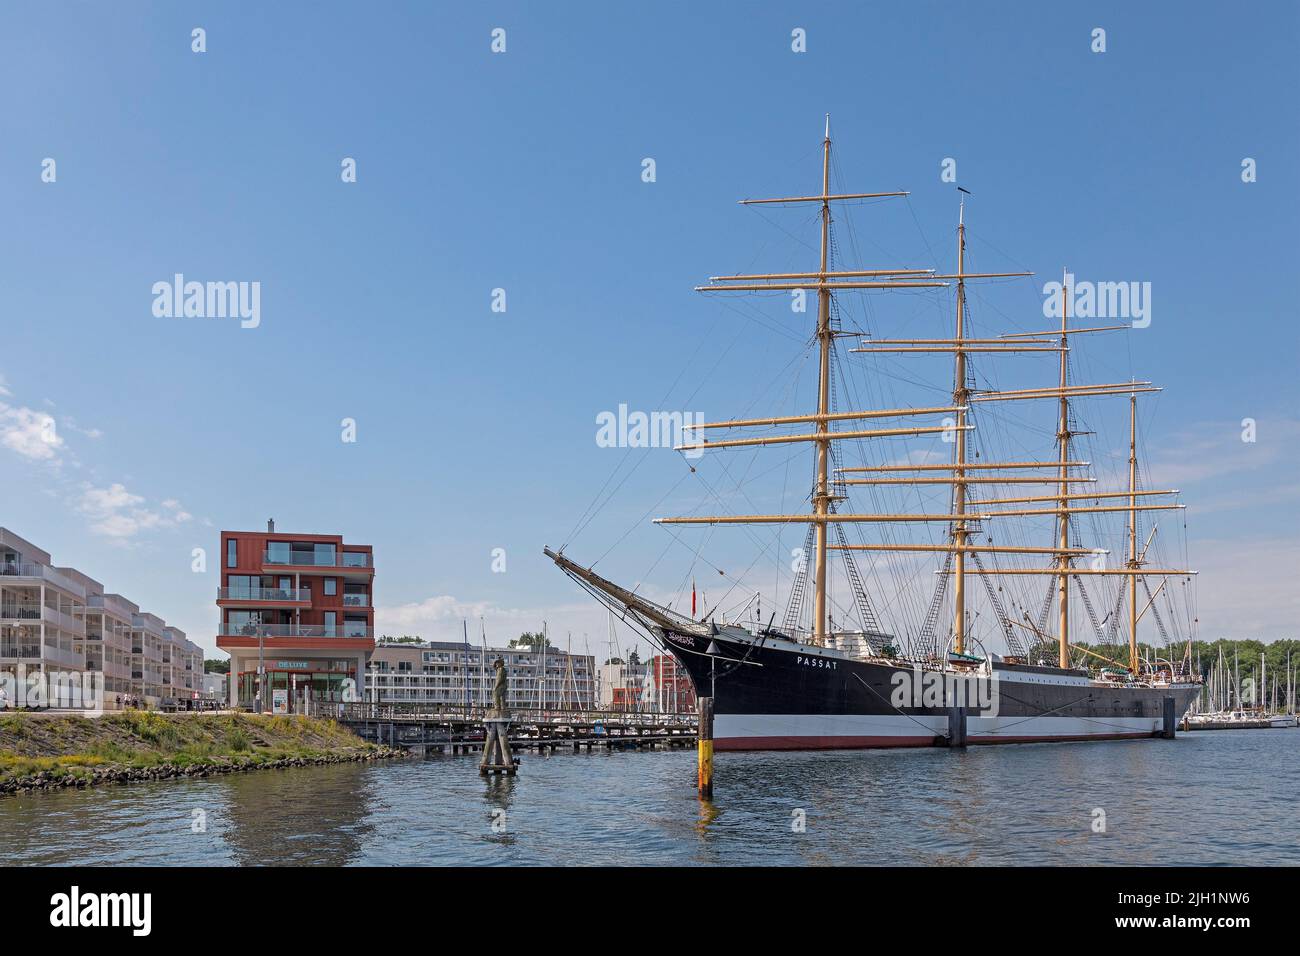 Waterfront quarter, Museum sailing ship Passat, Priwall, Travemünde, Lübeck, Schleswig-Holstein, Germany Stock Photo